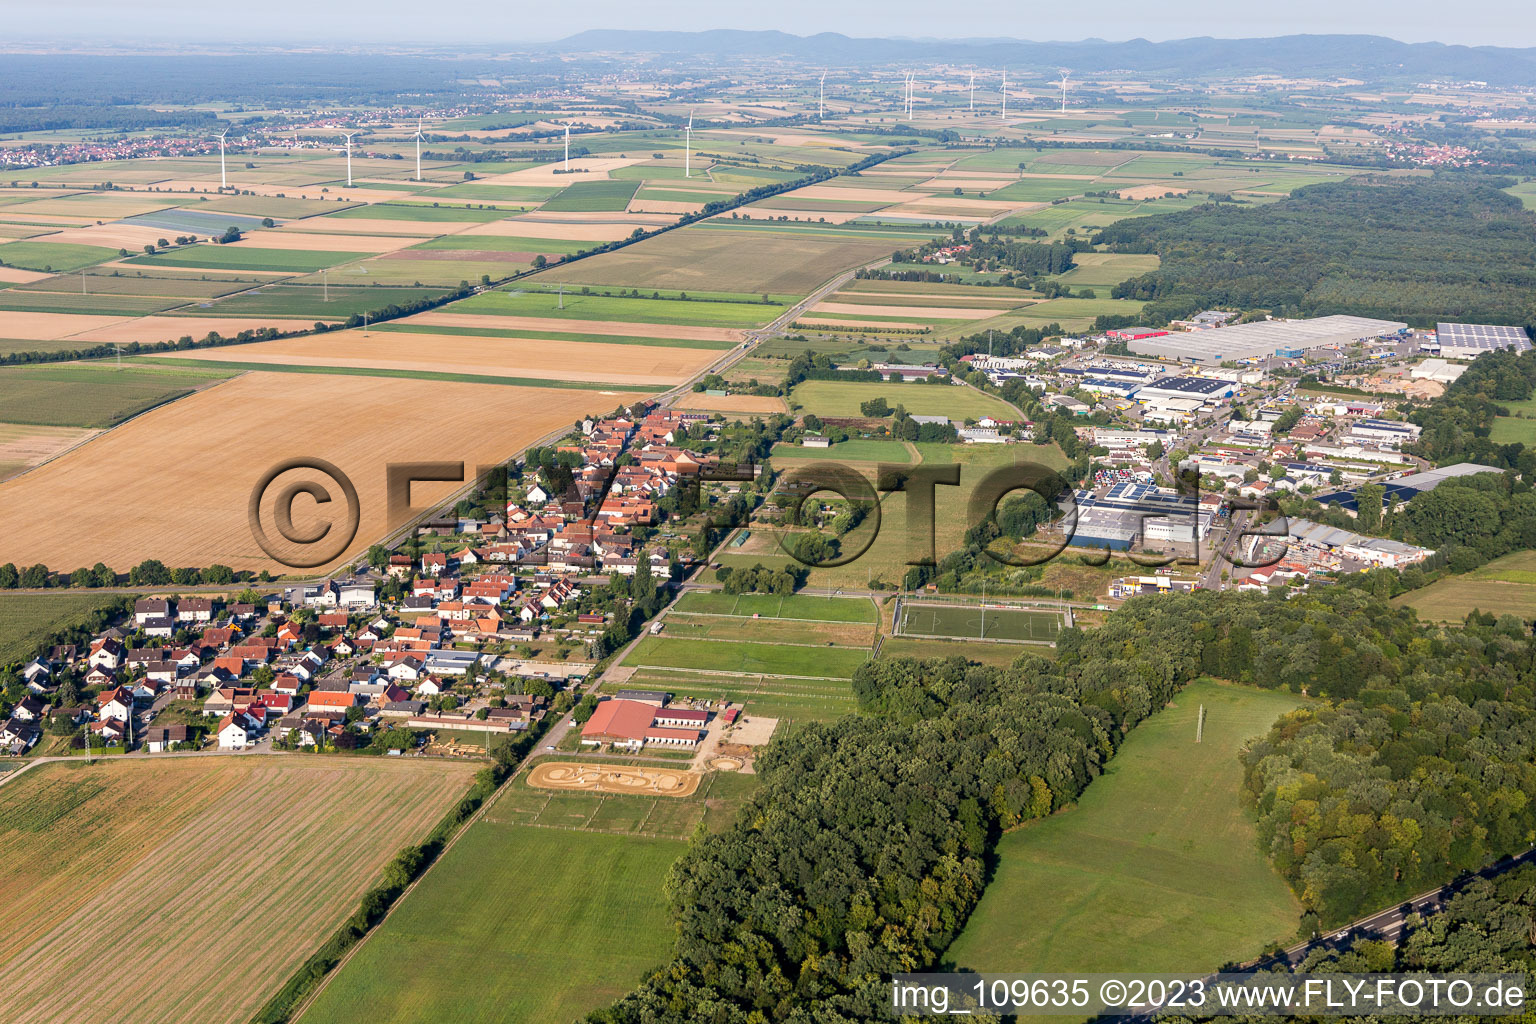 Bird's eye view of District Minderslachen in Kandel in the state Rhineland-Palatinate, Germany